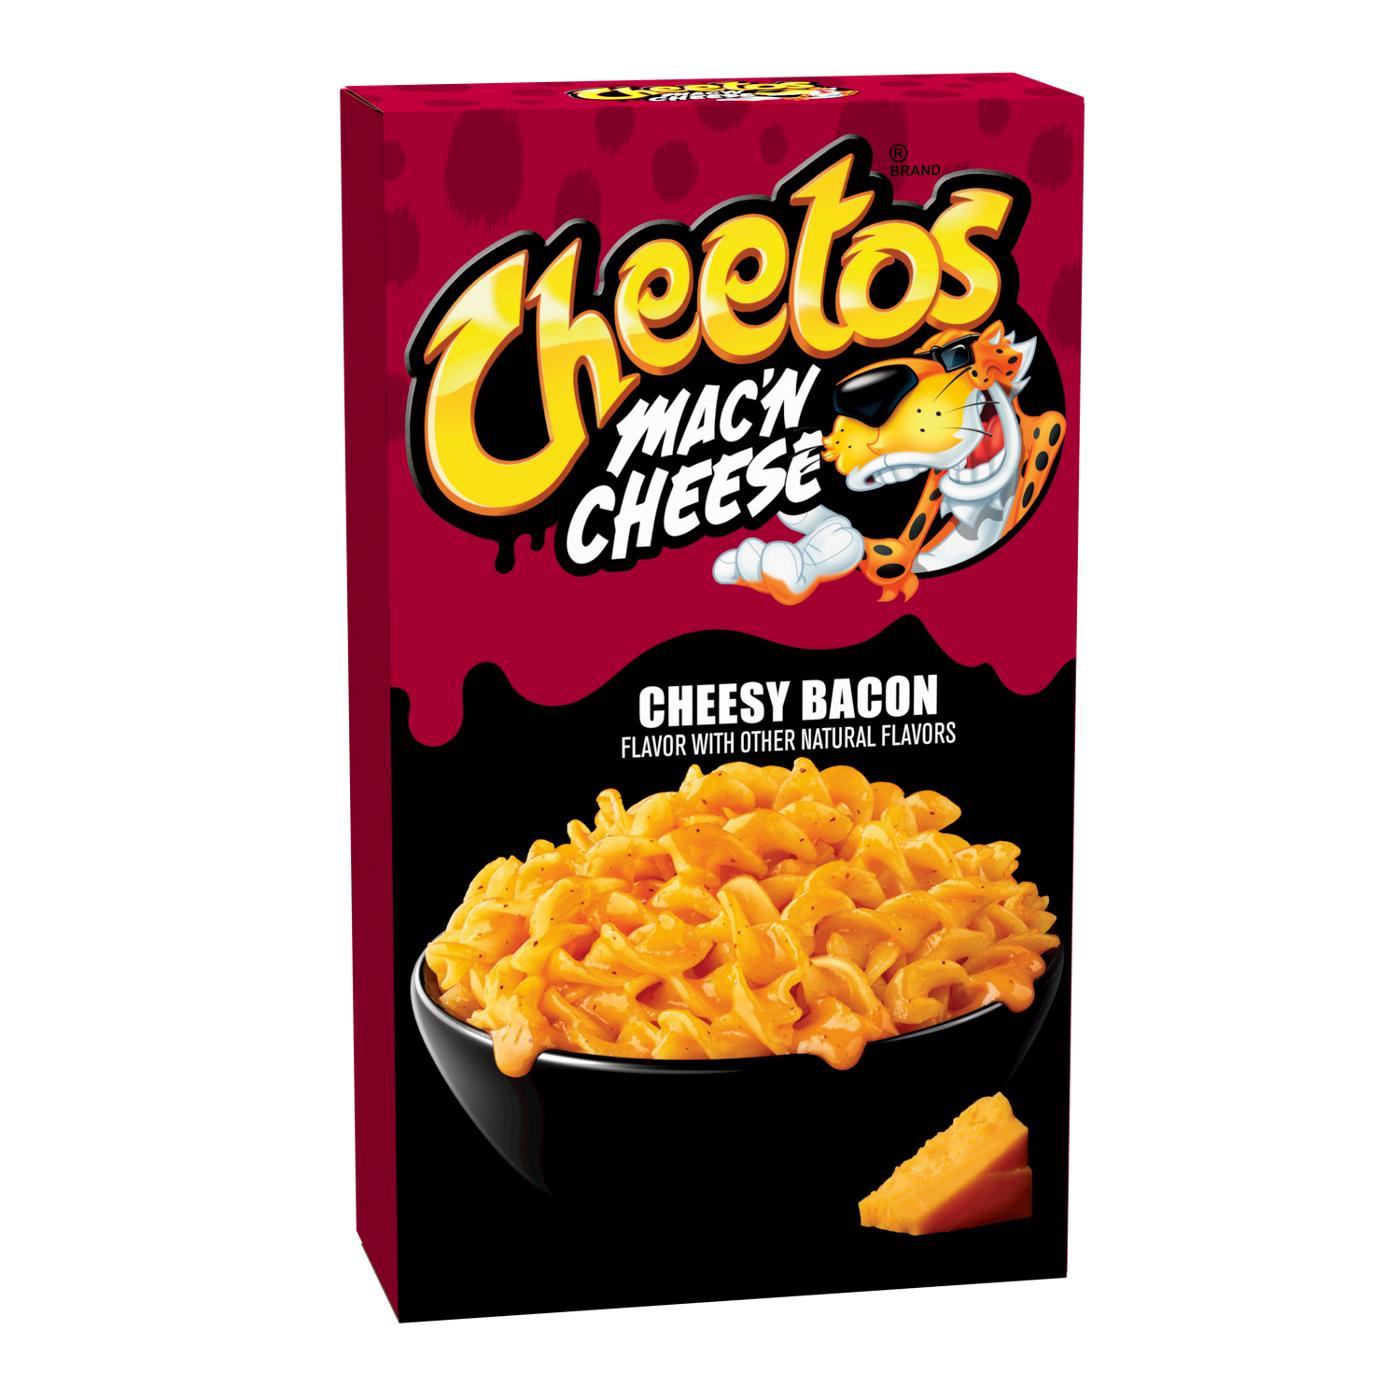 Cheetos Cheesy Bacon Mac 'n Cheese; image 1 of 2